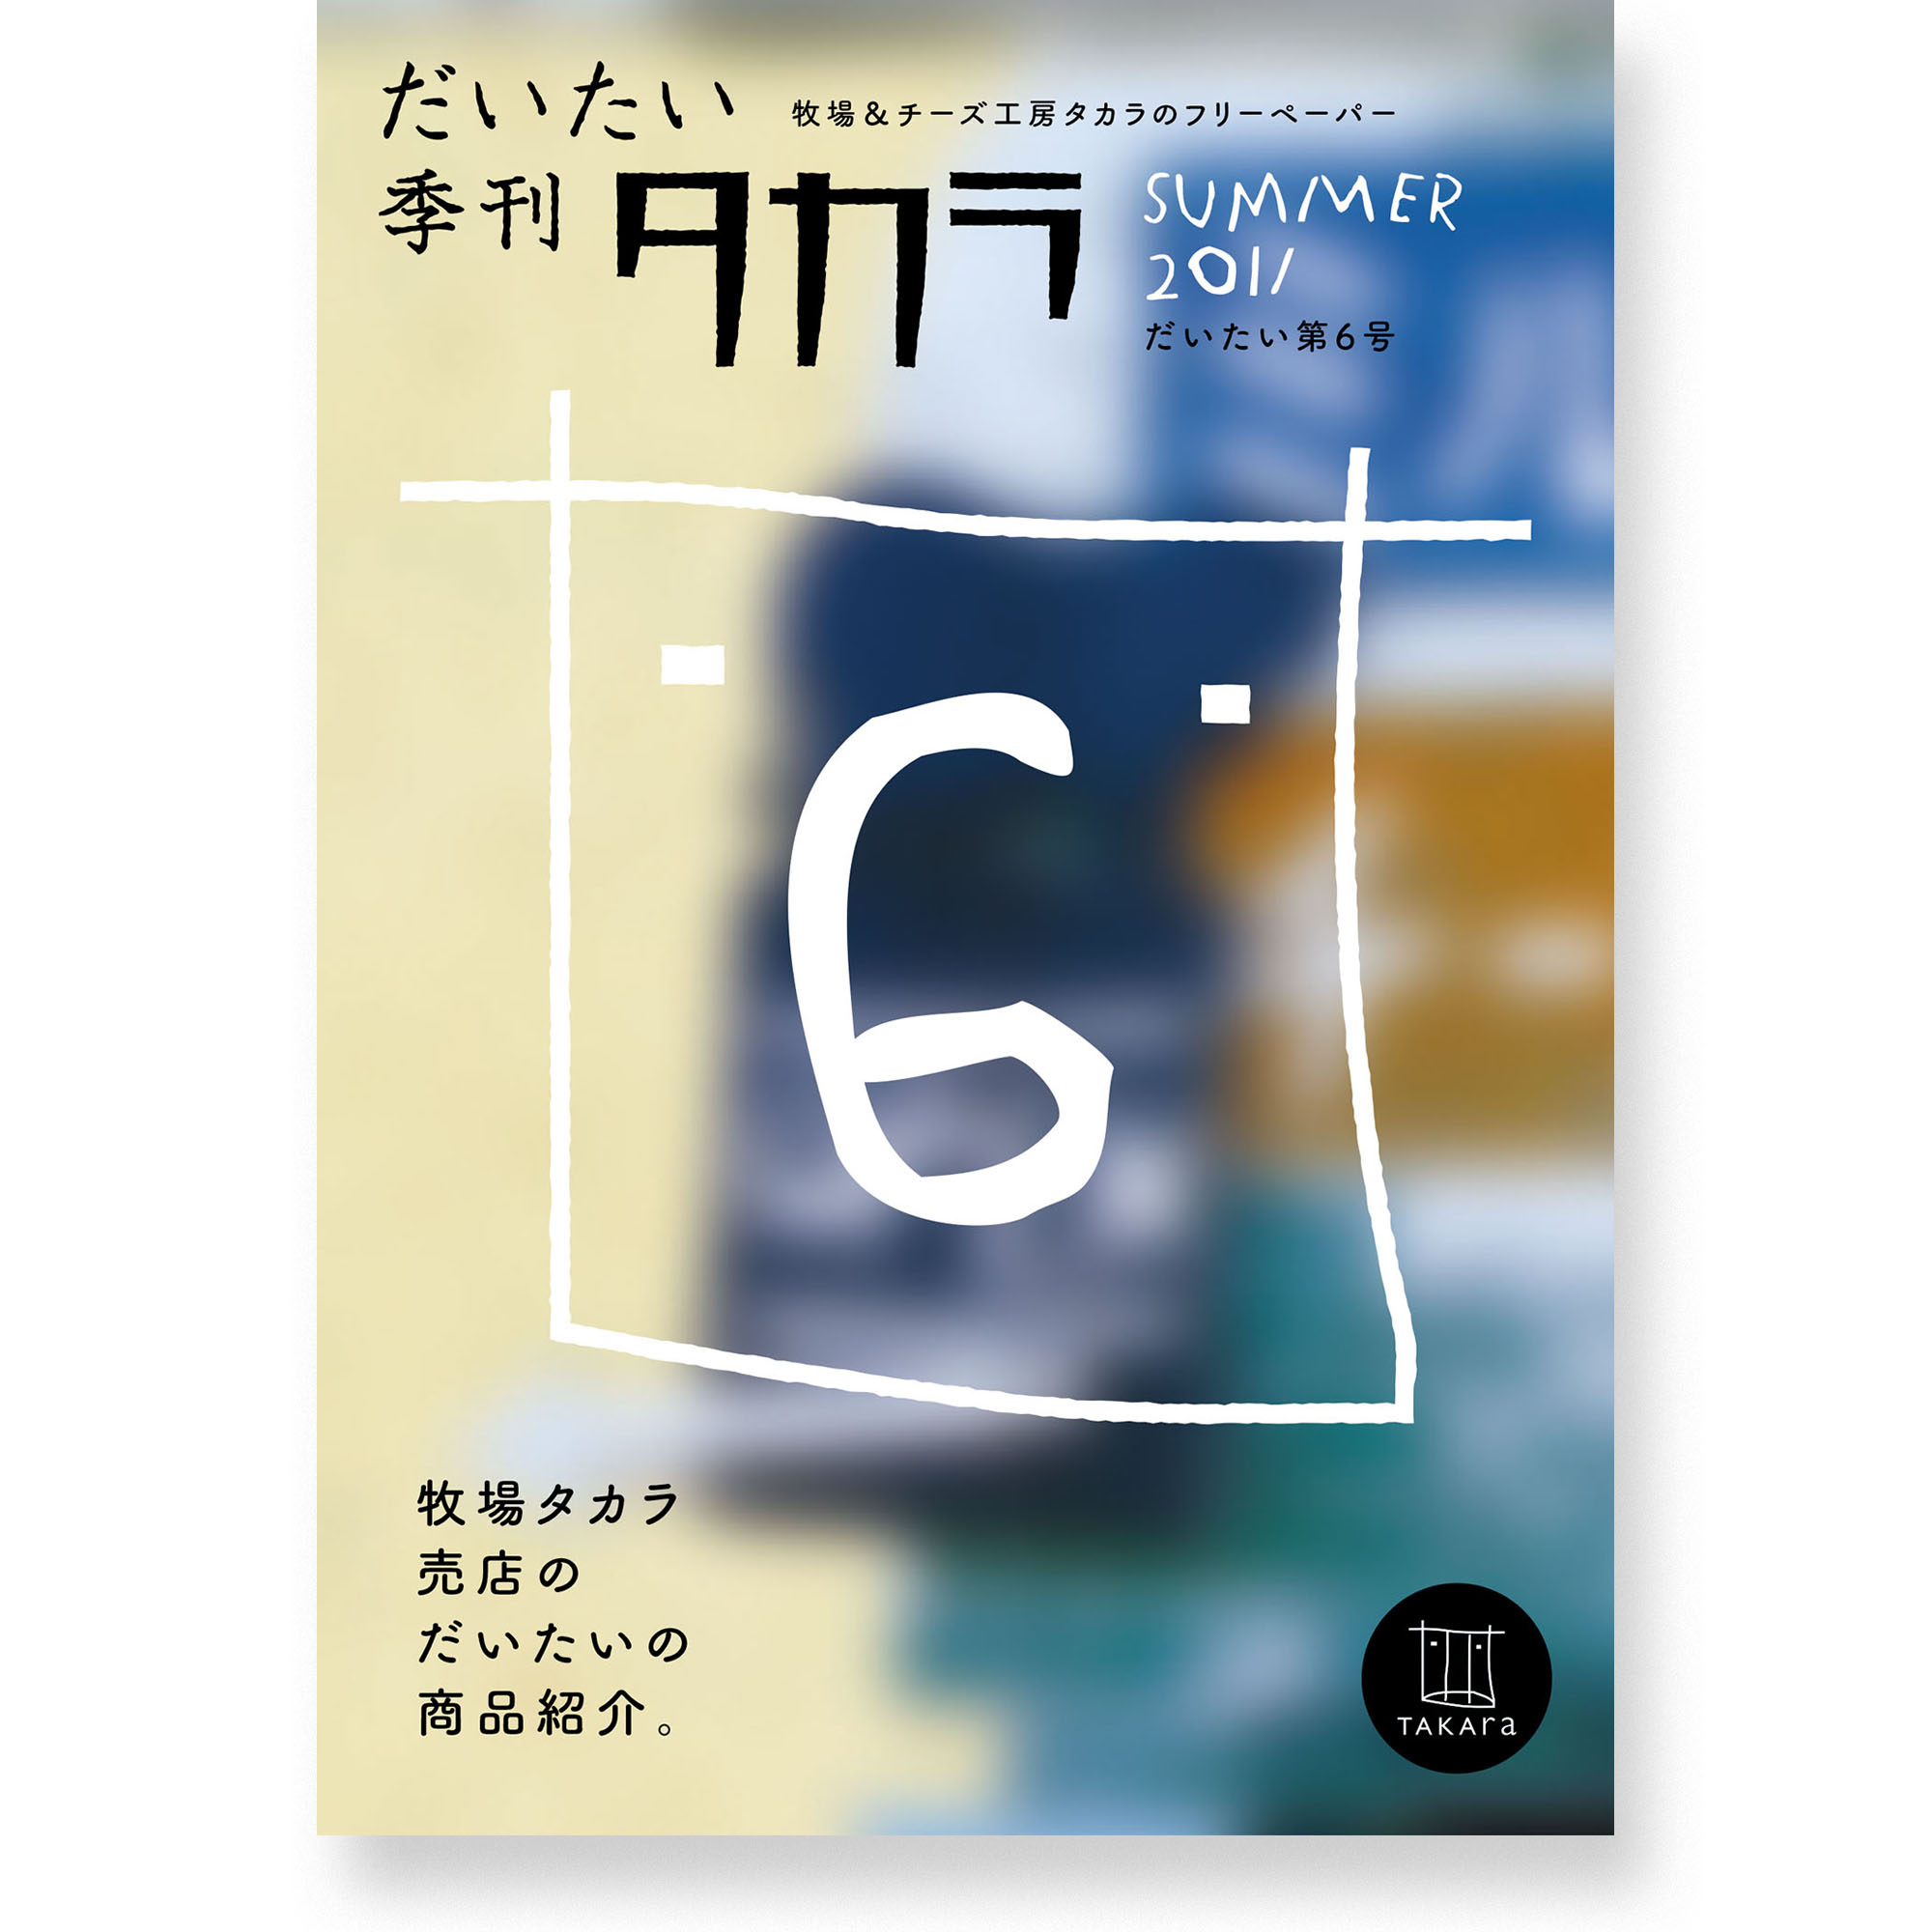 Daitai Quarterly Takara Vol.6